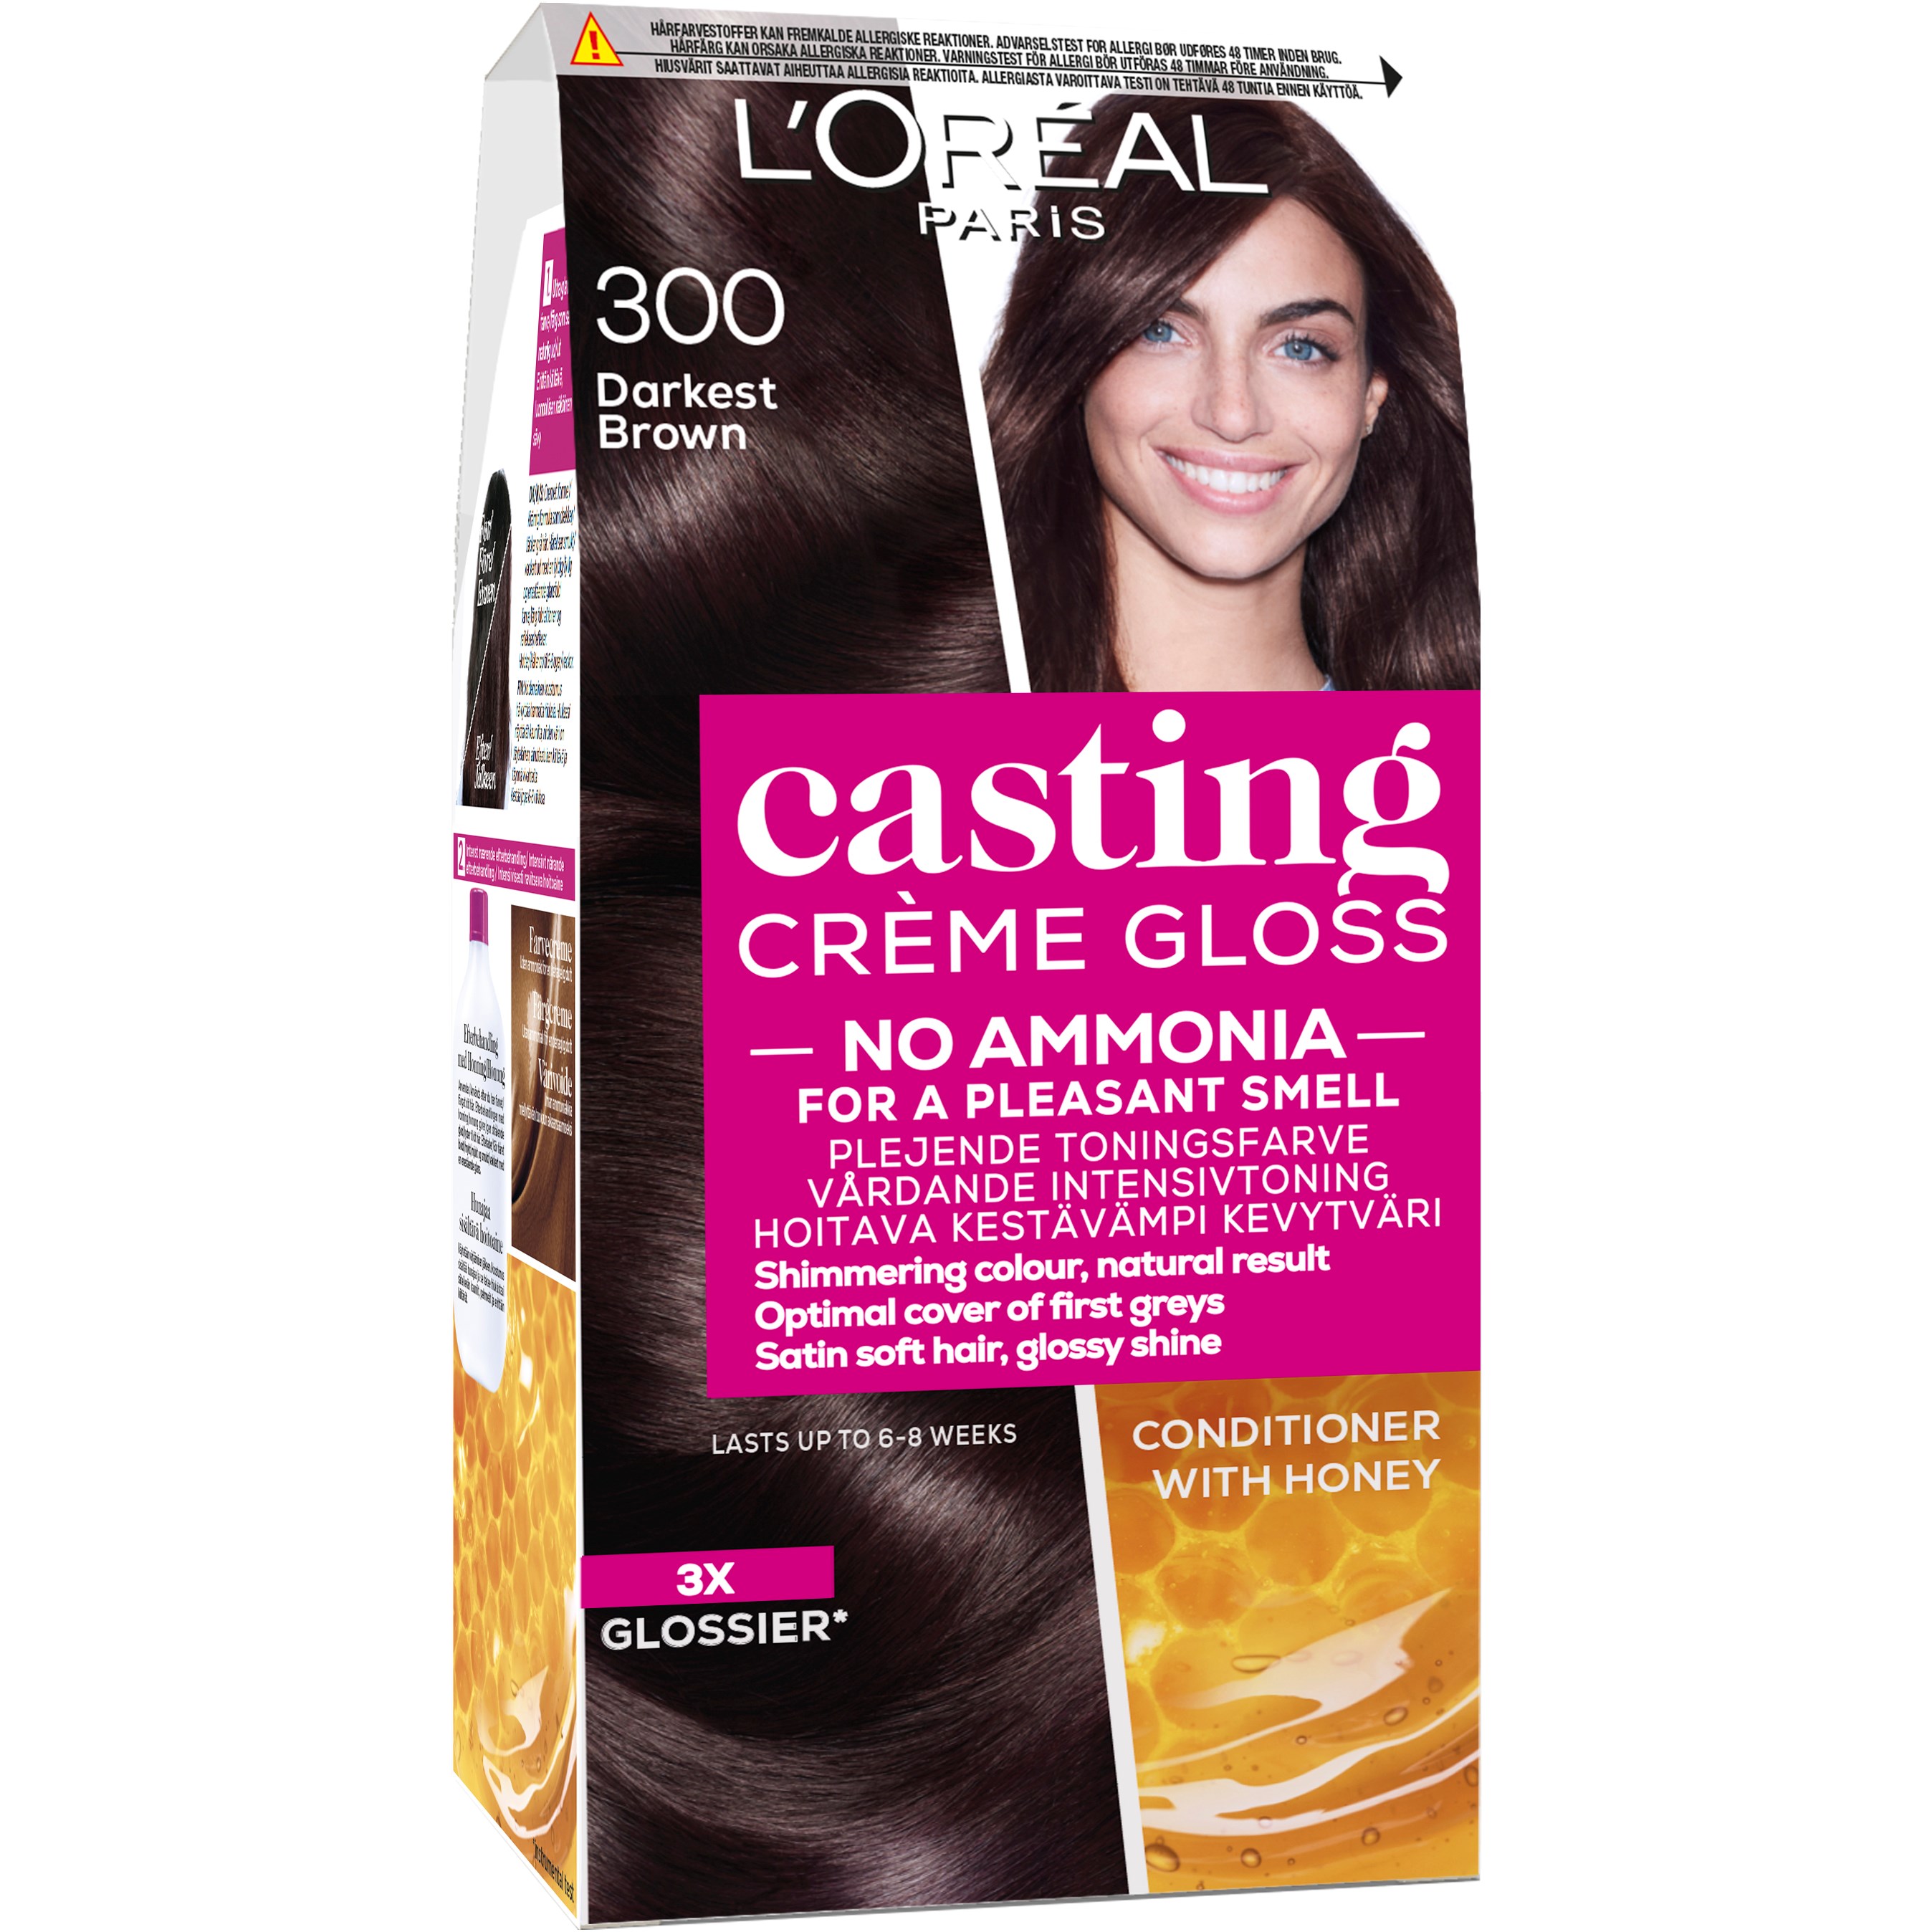 Loreal Paris Casting Crème Gloss 300 Darkest Brown